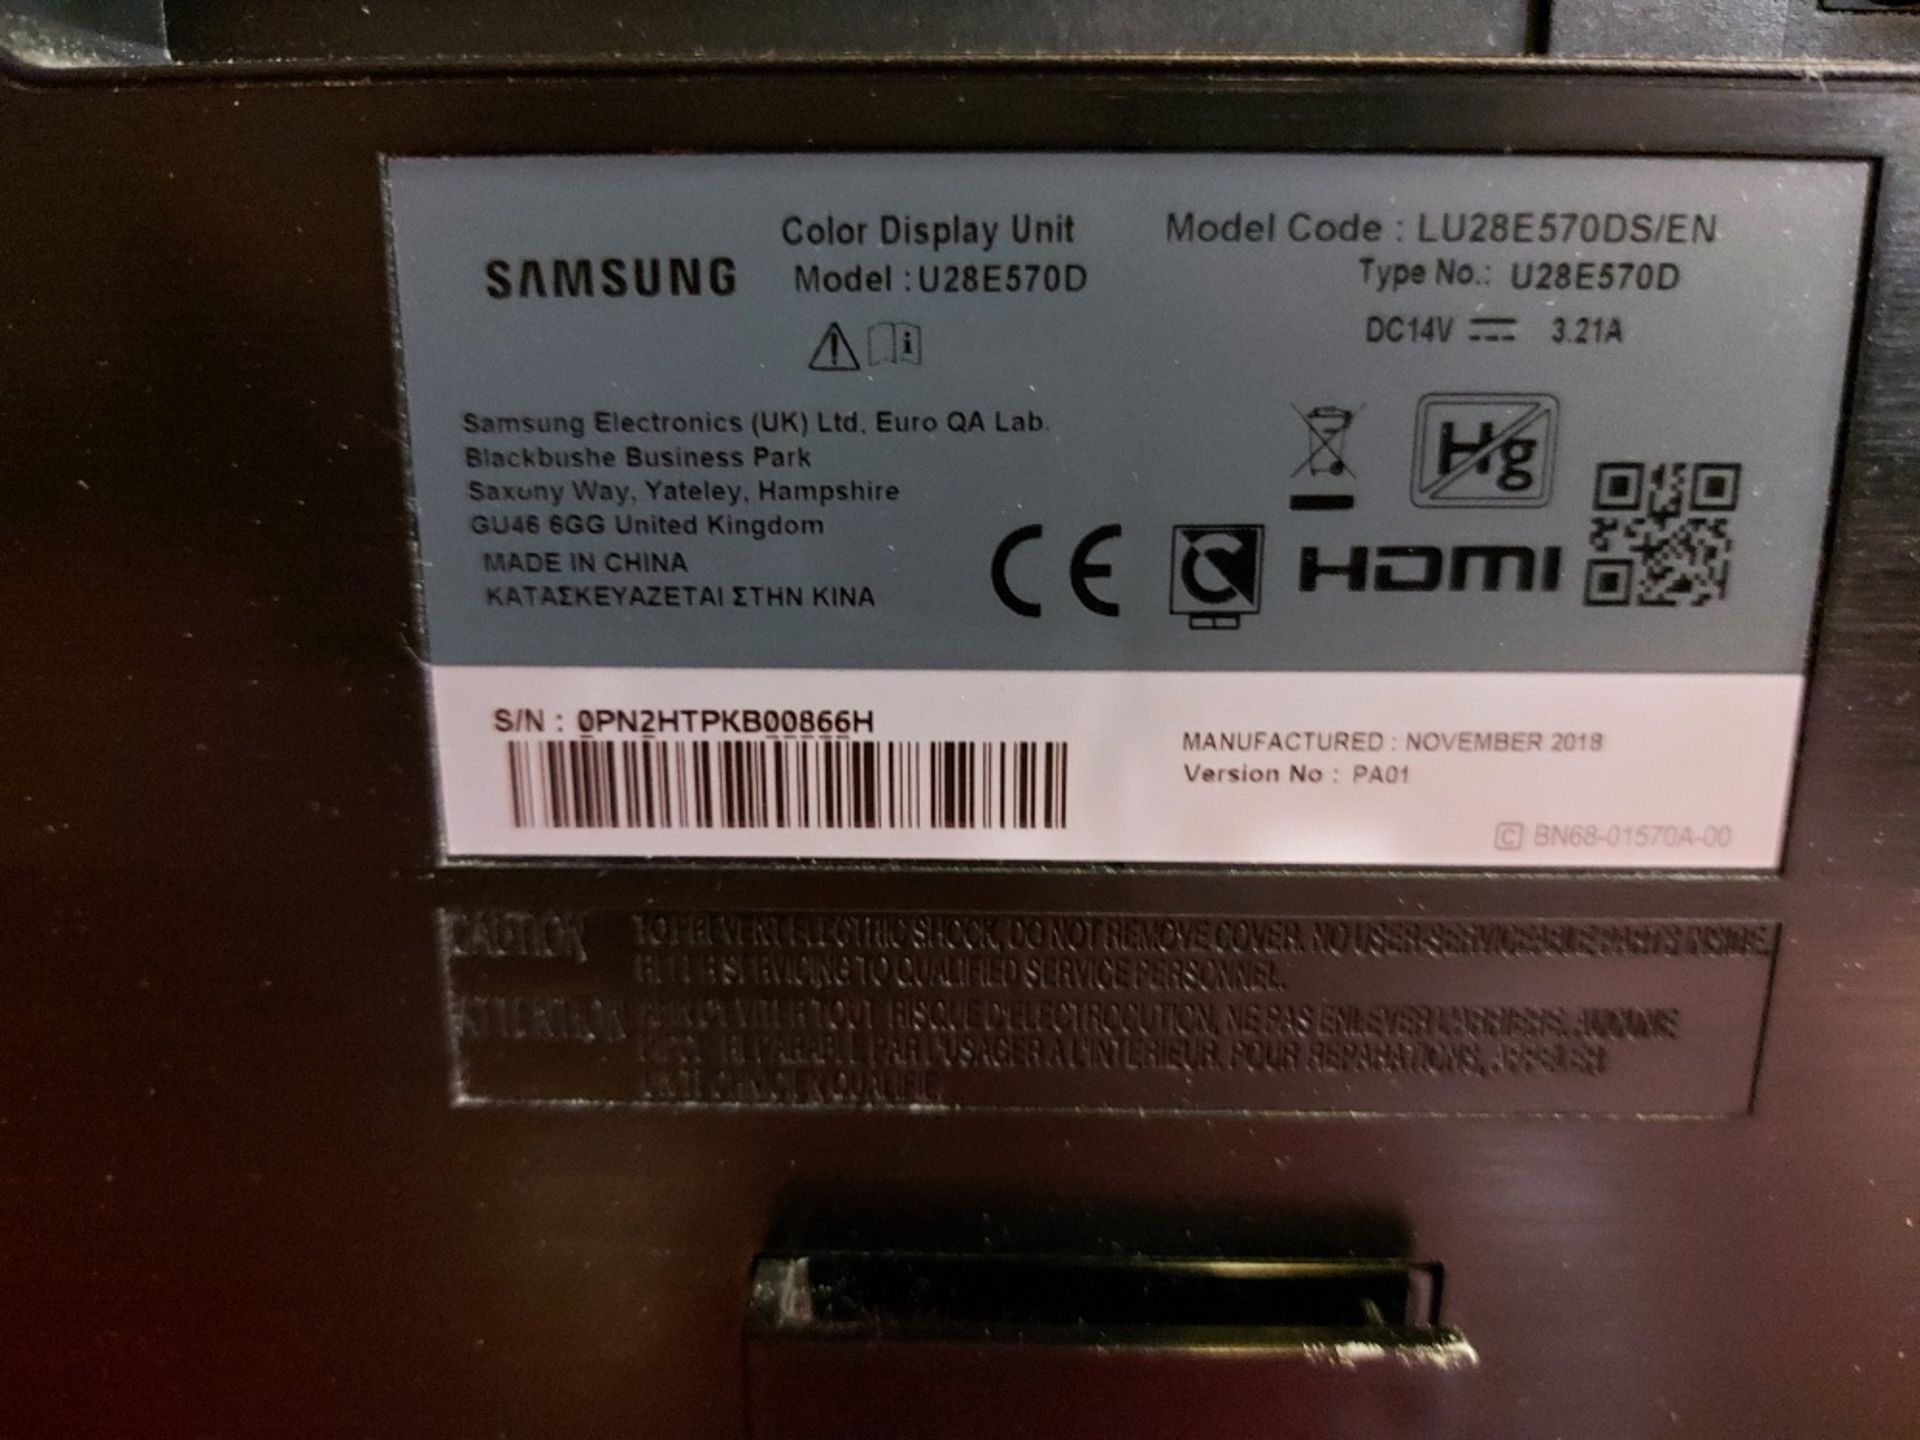 Samsung U28E570D Color Display Unit - Image 3 of 3